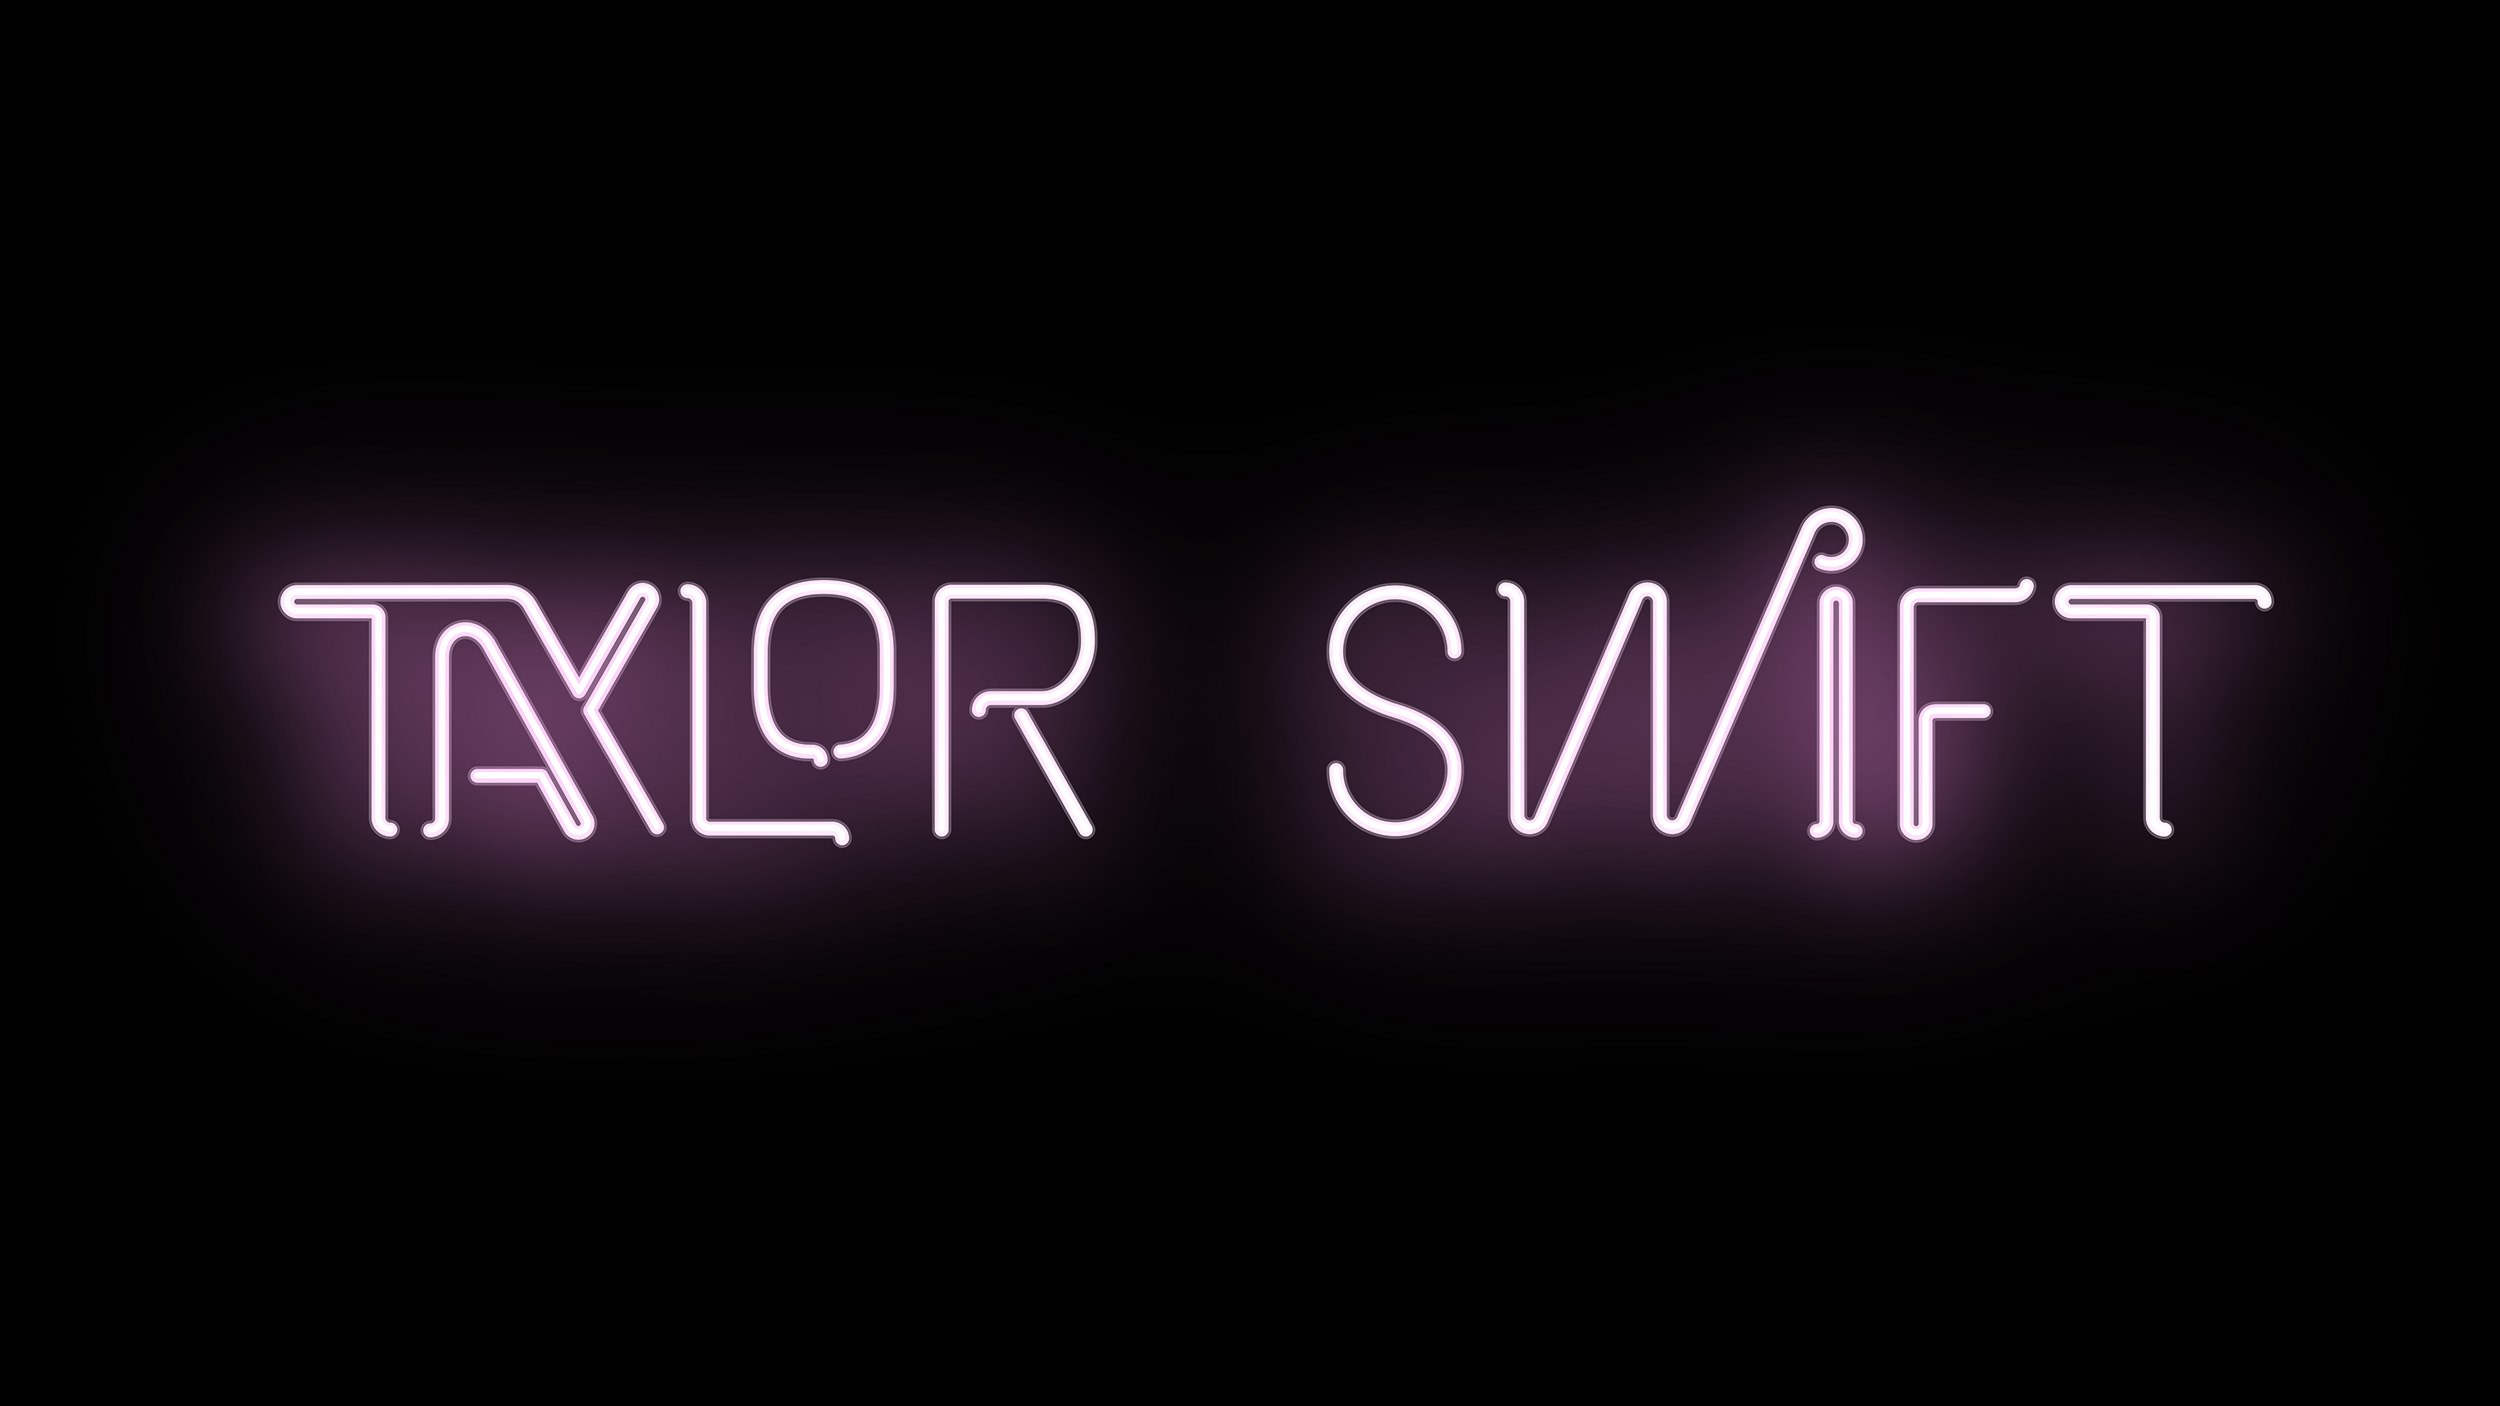 Taylor Swift Neon branding and logotype.